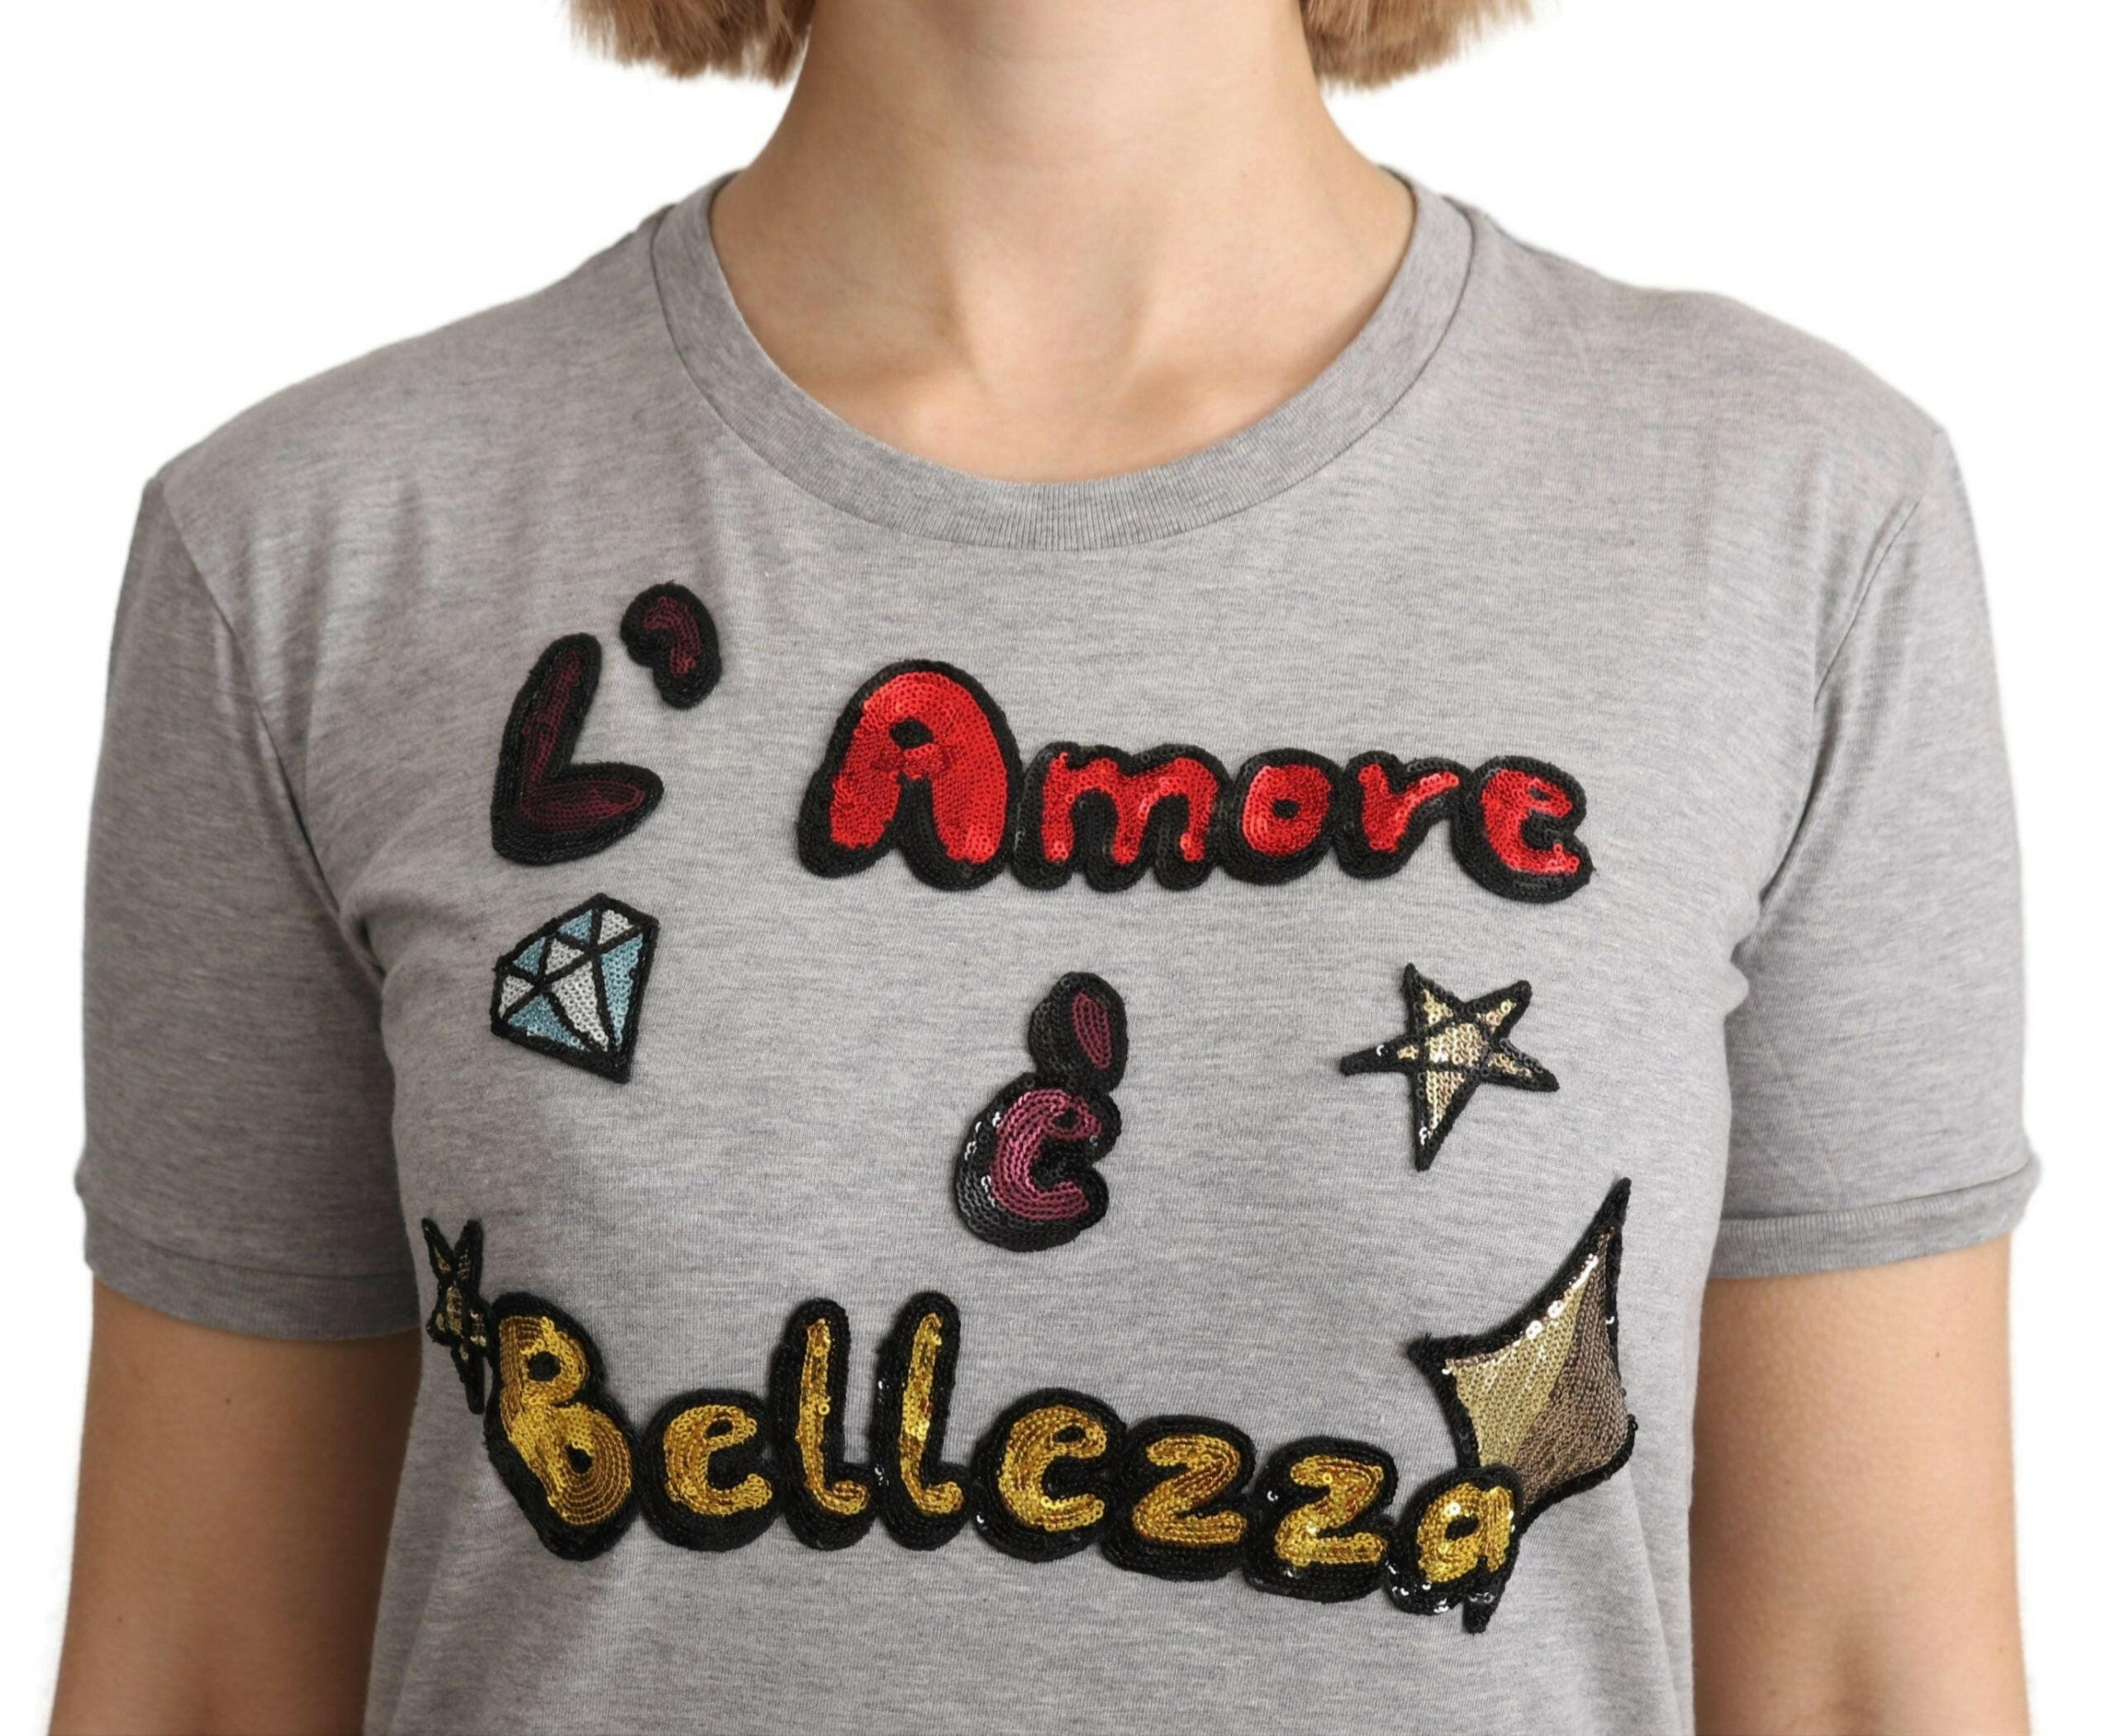 Dolce & Gabbana Gray Cotton Amore e Bellezza Top T-shirt - GENUINE AUTHENTIC BRAND LLC  